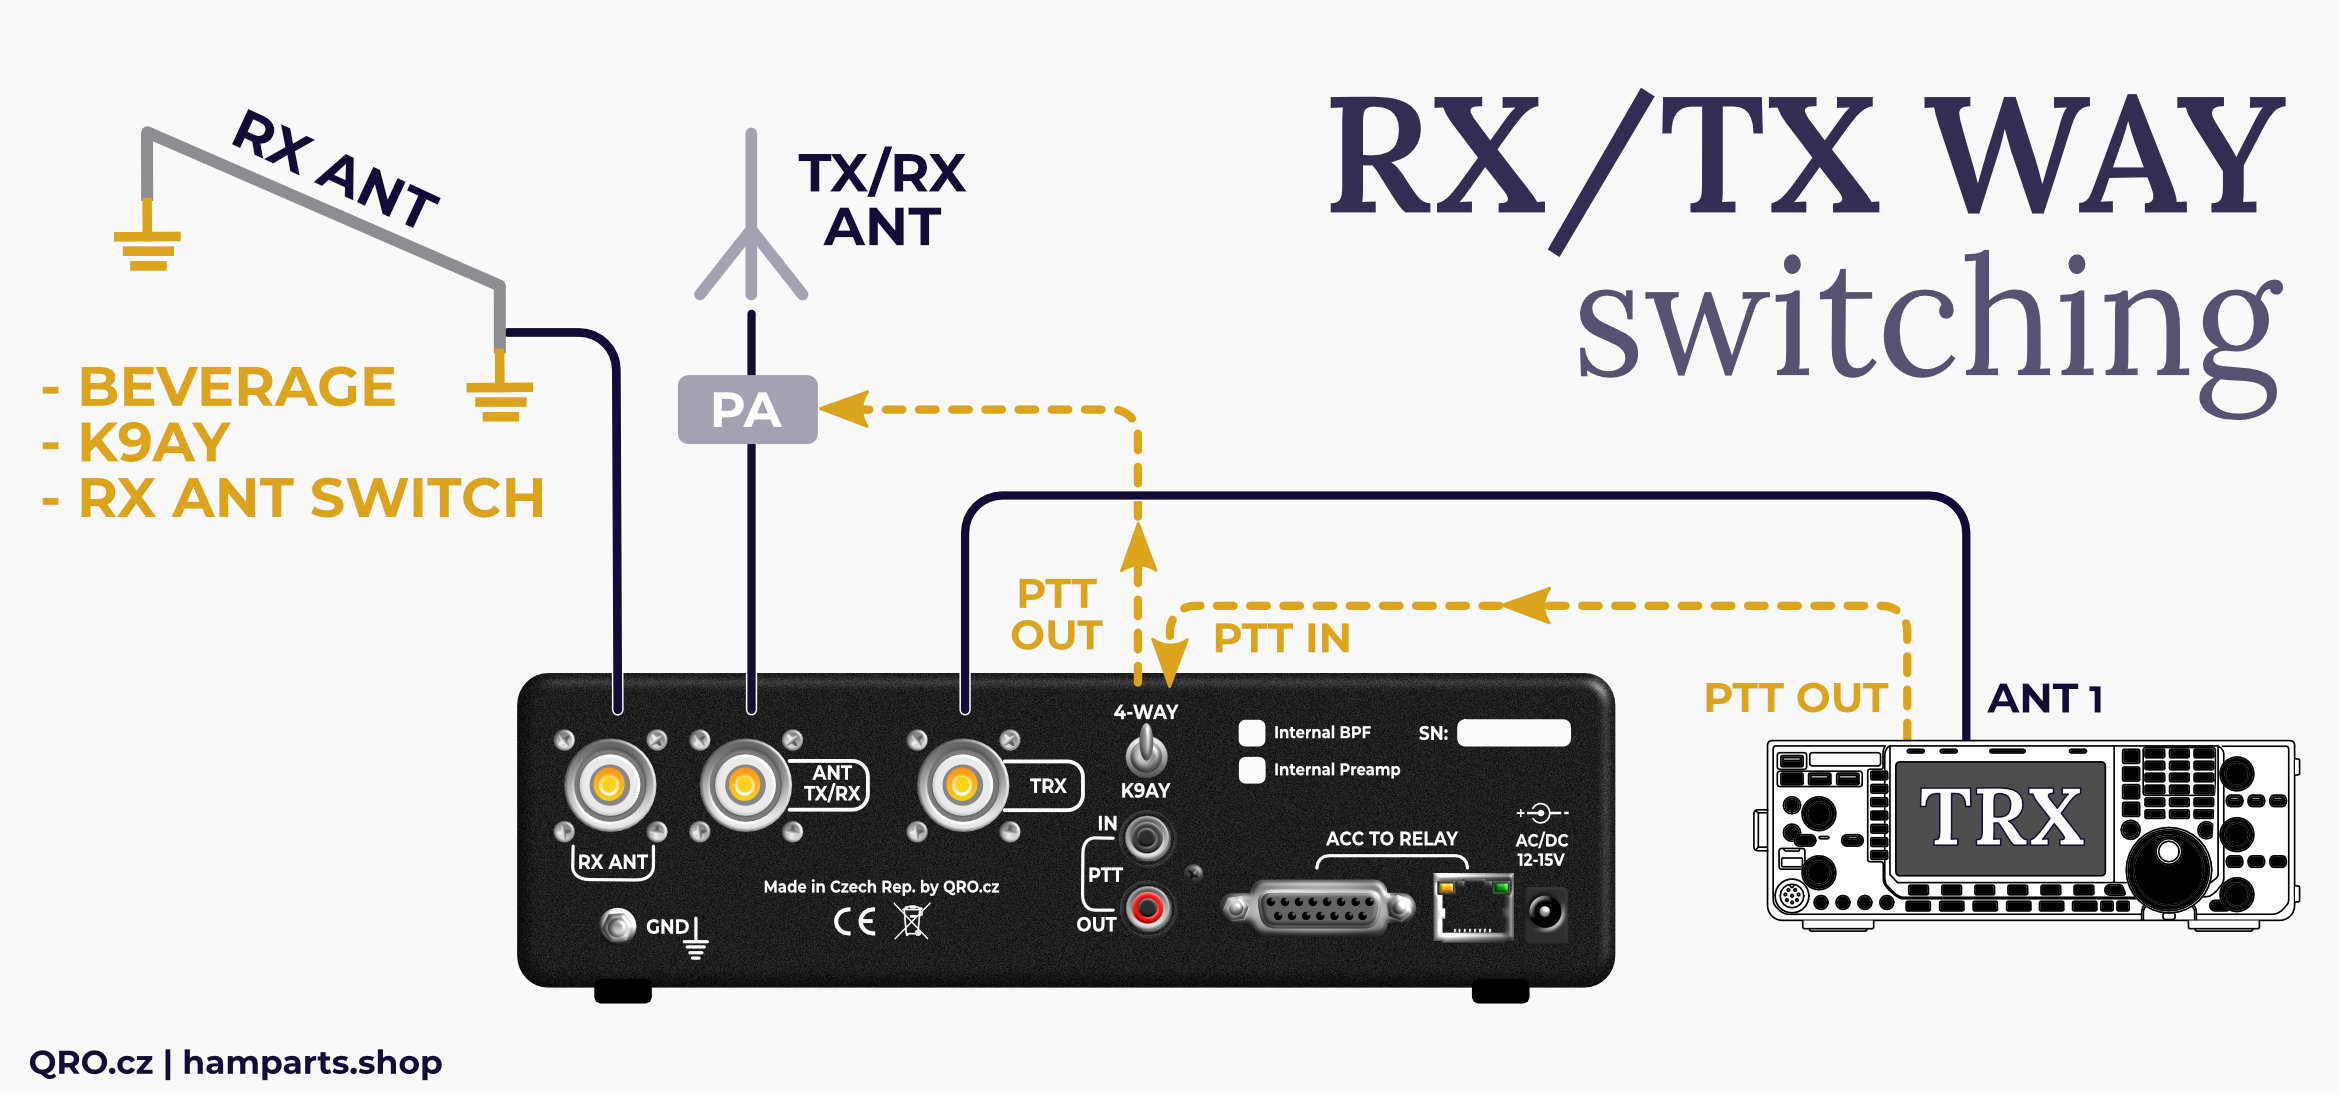 k9ay/4-way antenna switch controller rx tx switching qro.cz hamparts.shop